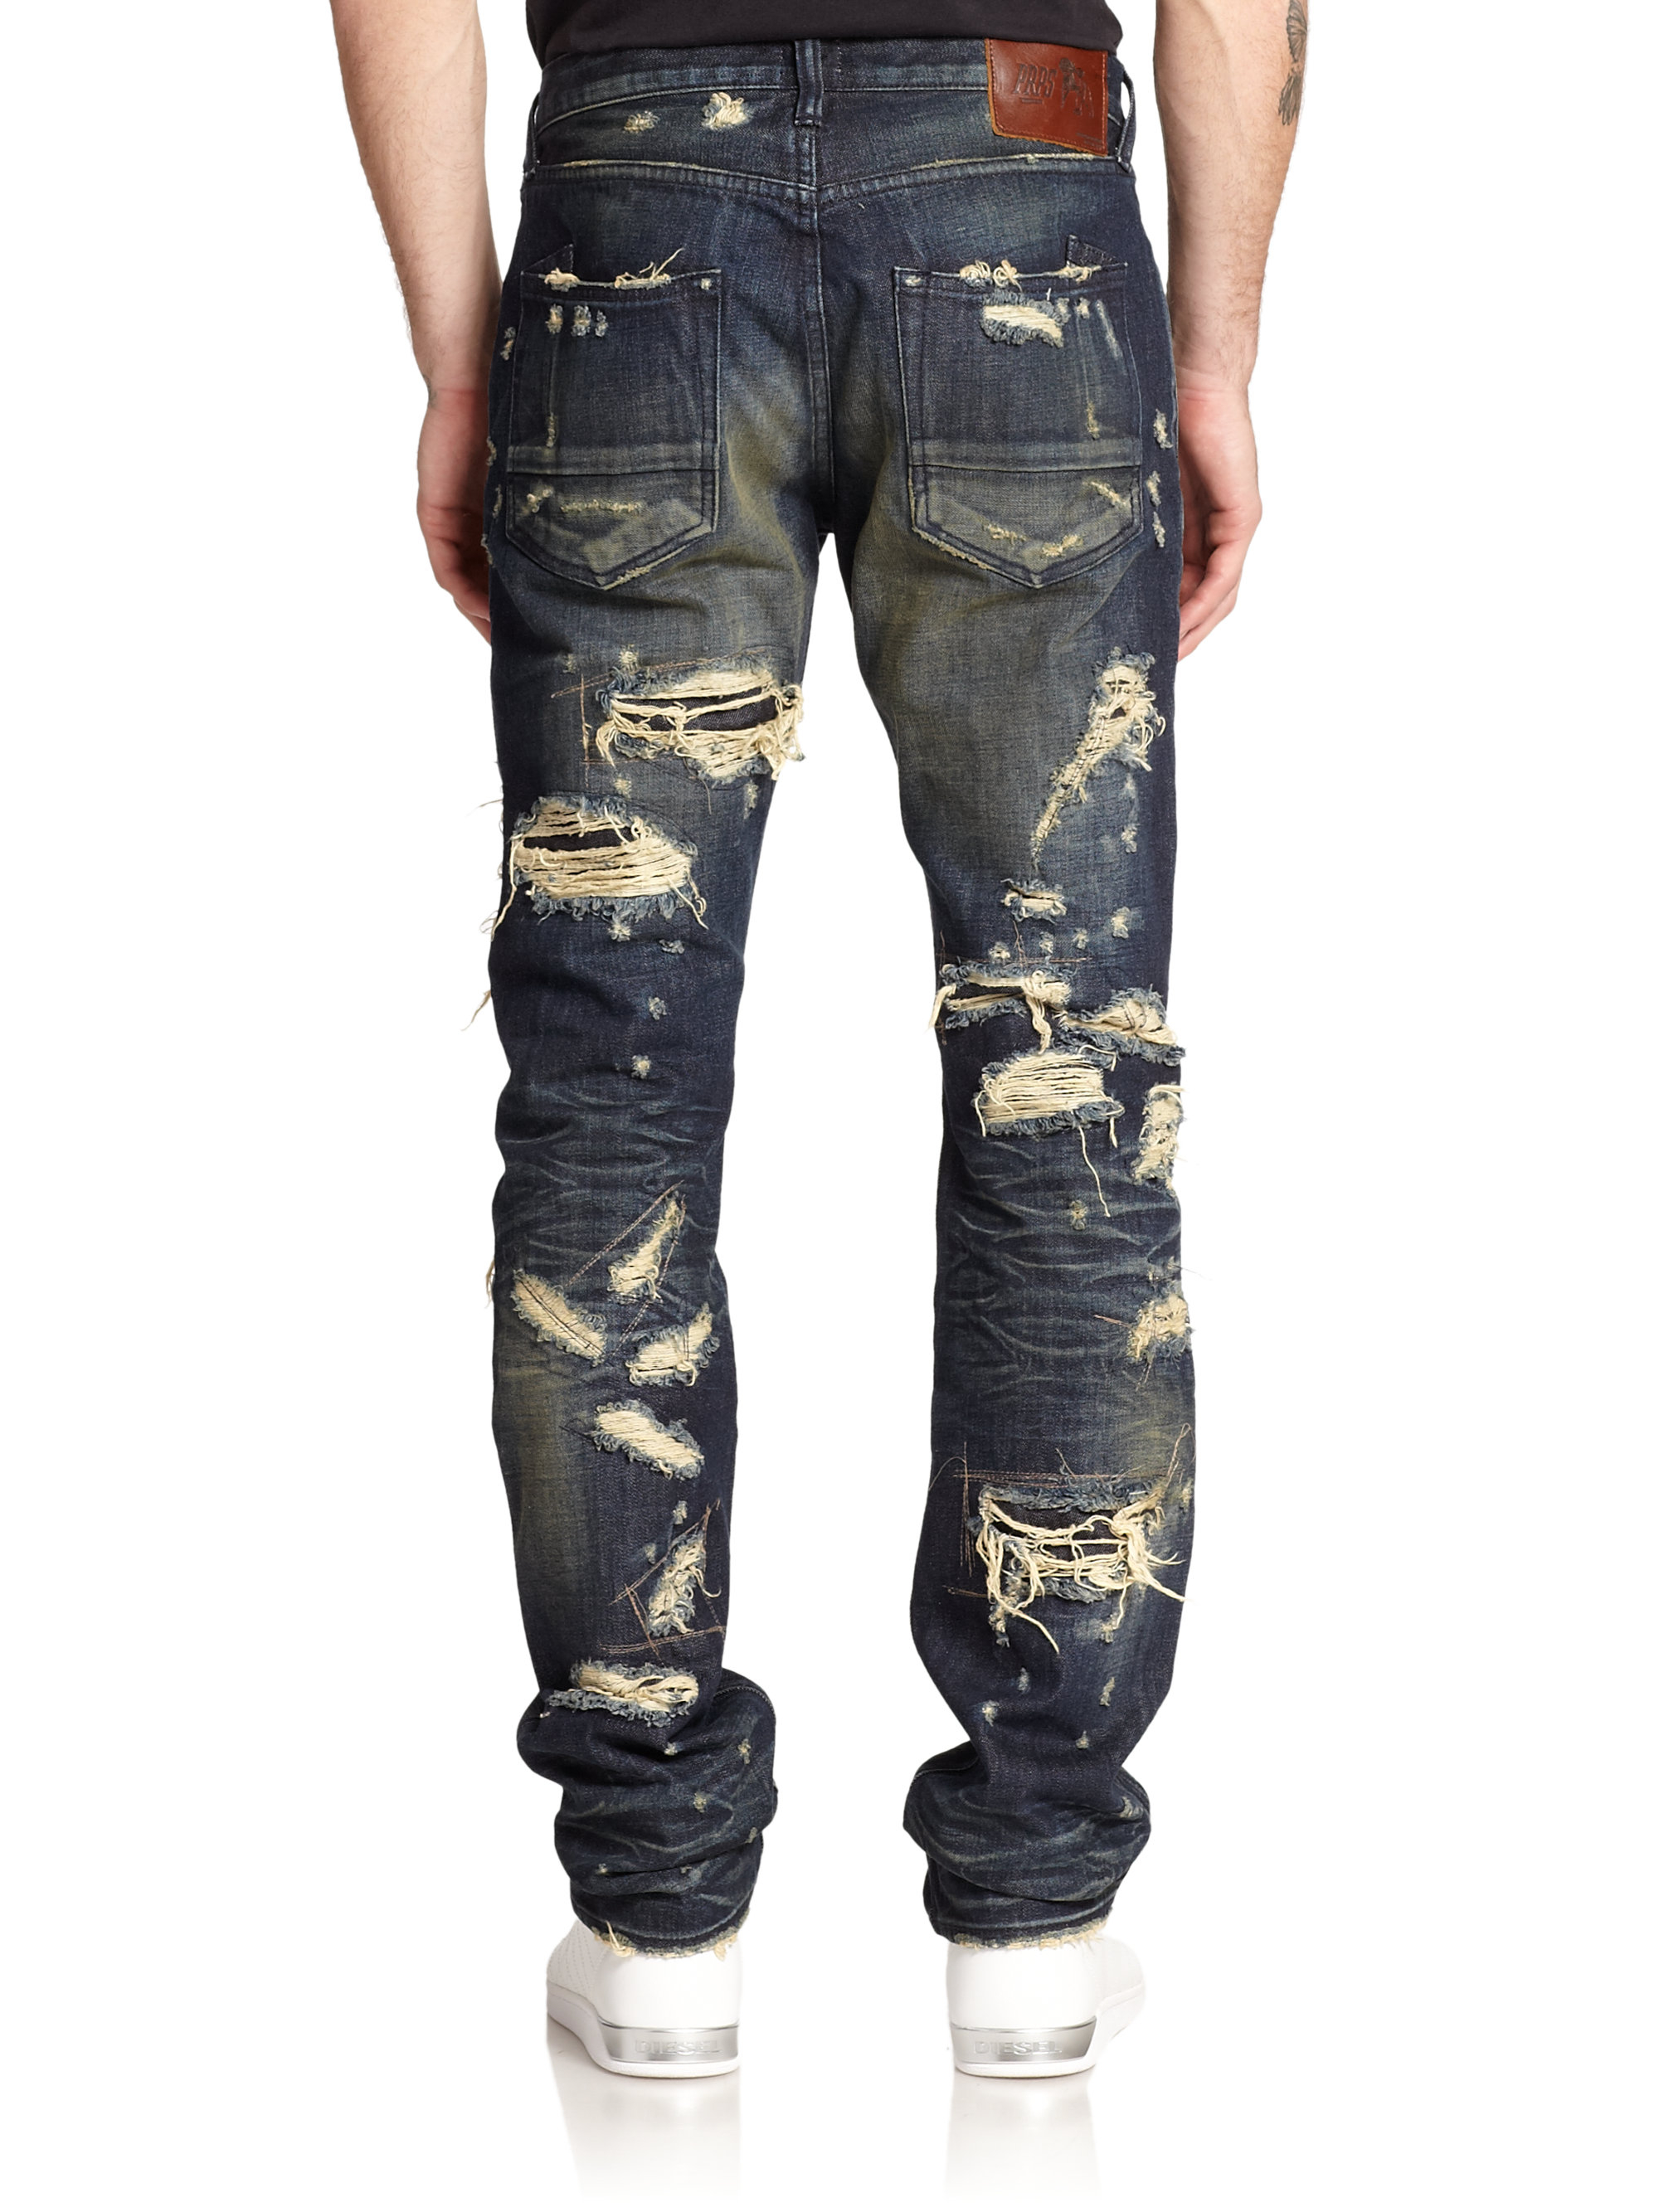 Lyst - Prps Demon Distressed Slim-fit Jeans in Blue for Men